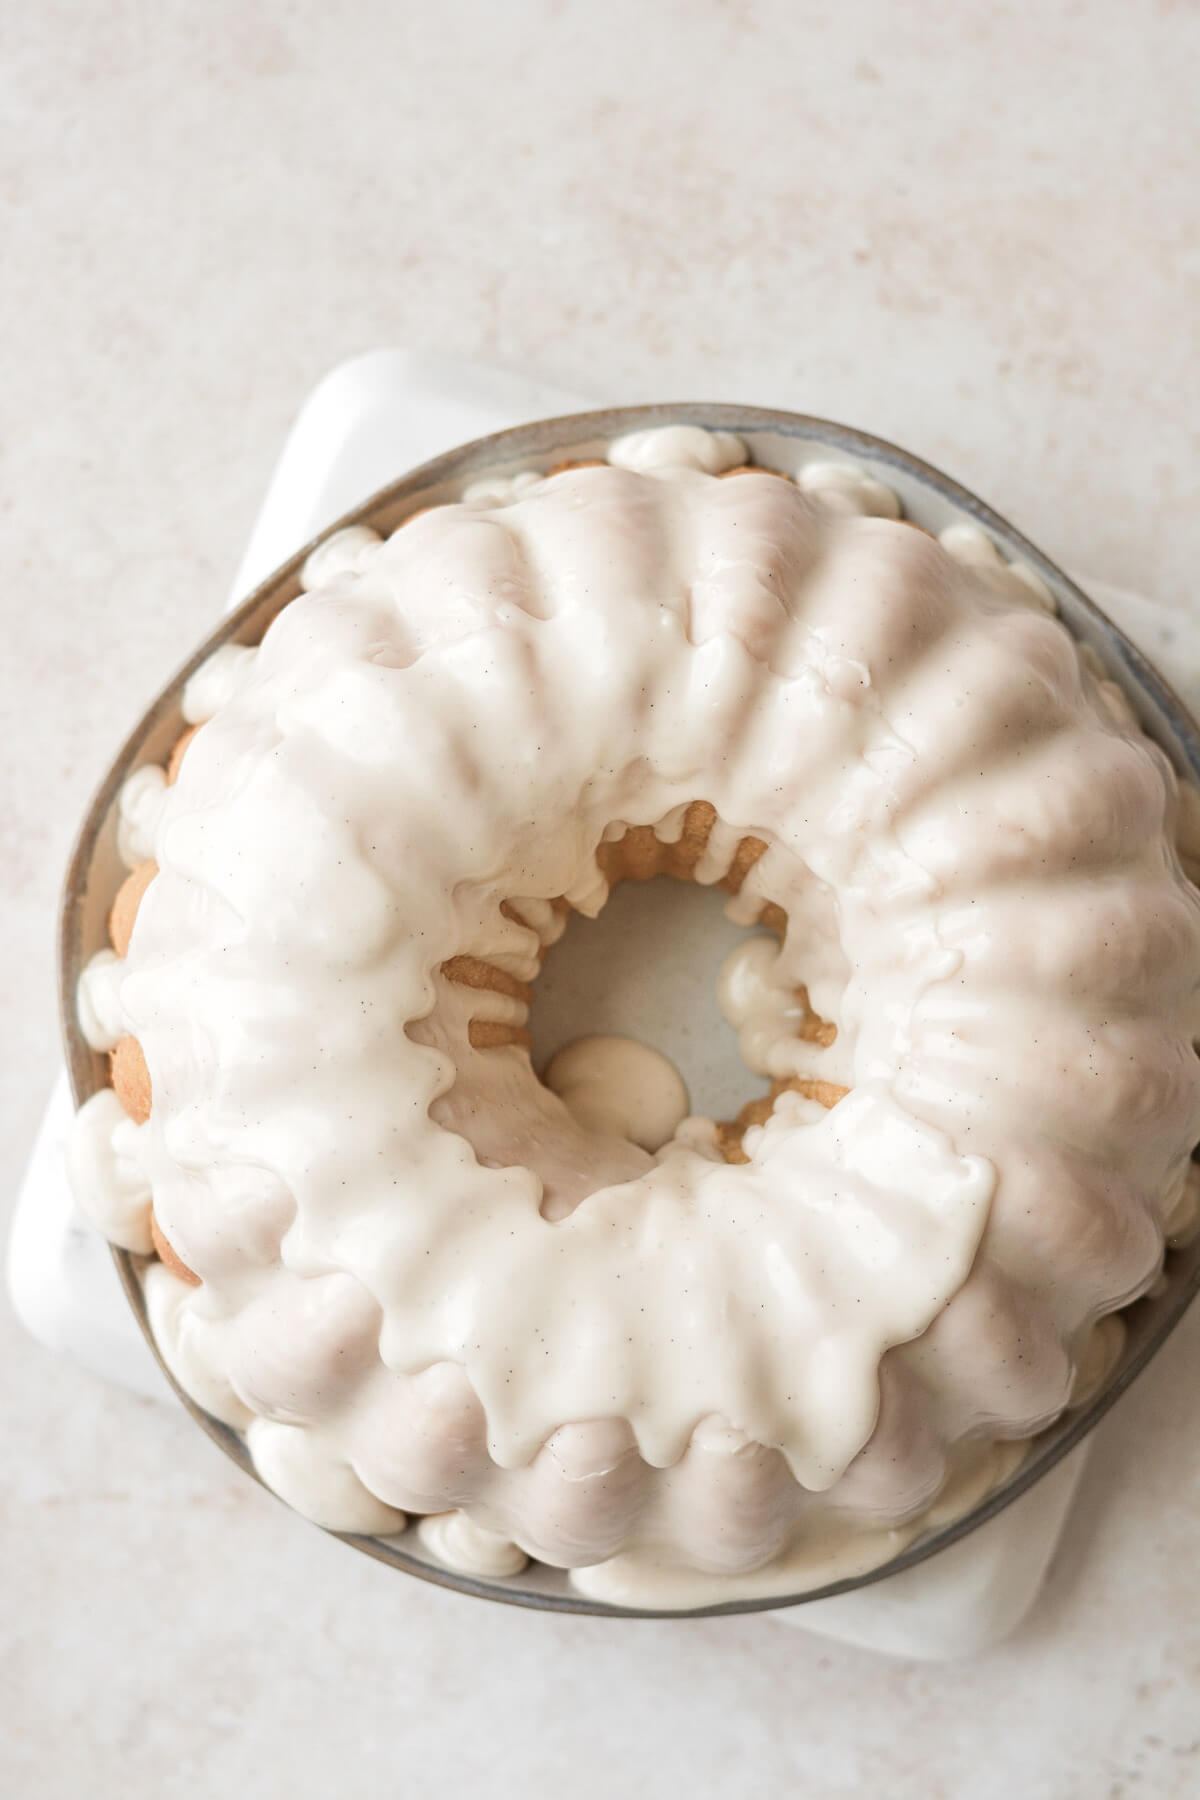 Old fashioned sour cream glazed donut cake.